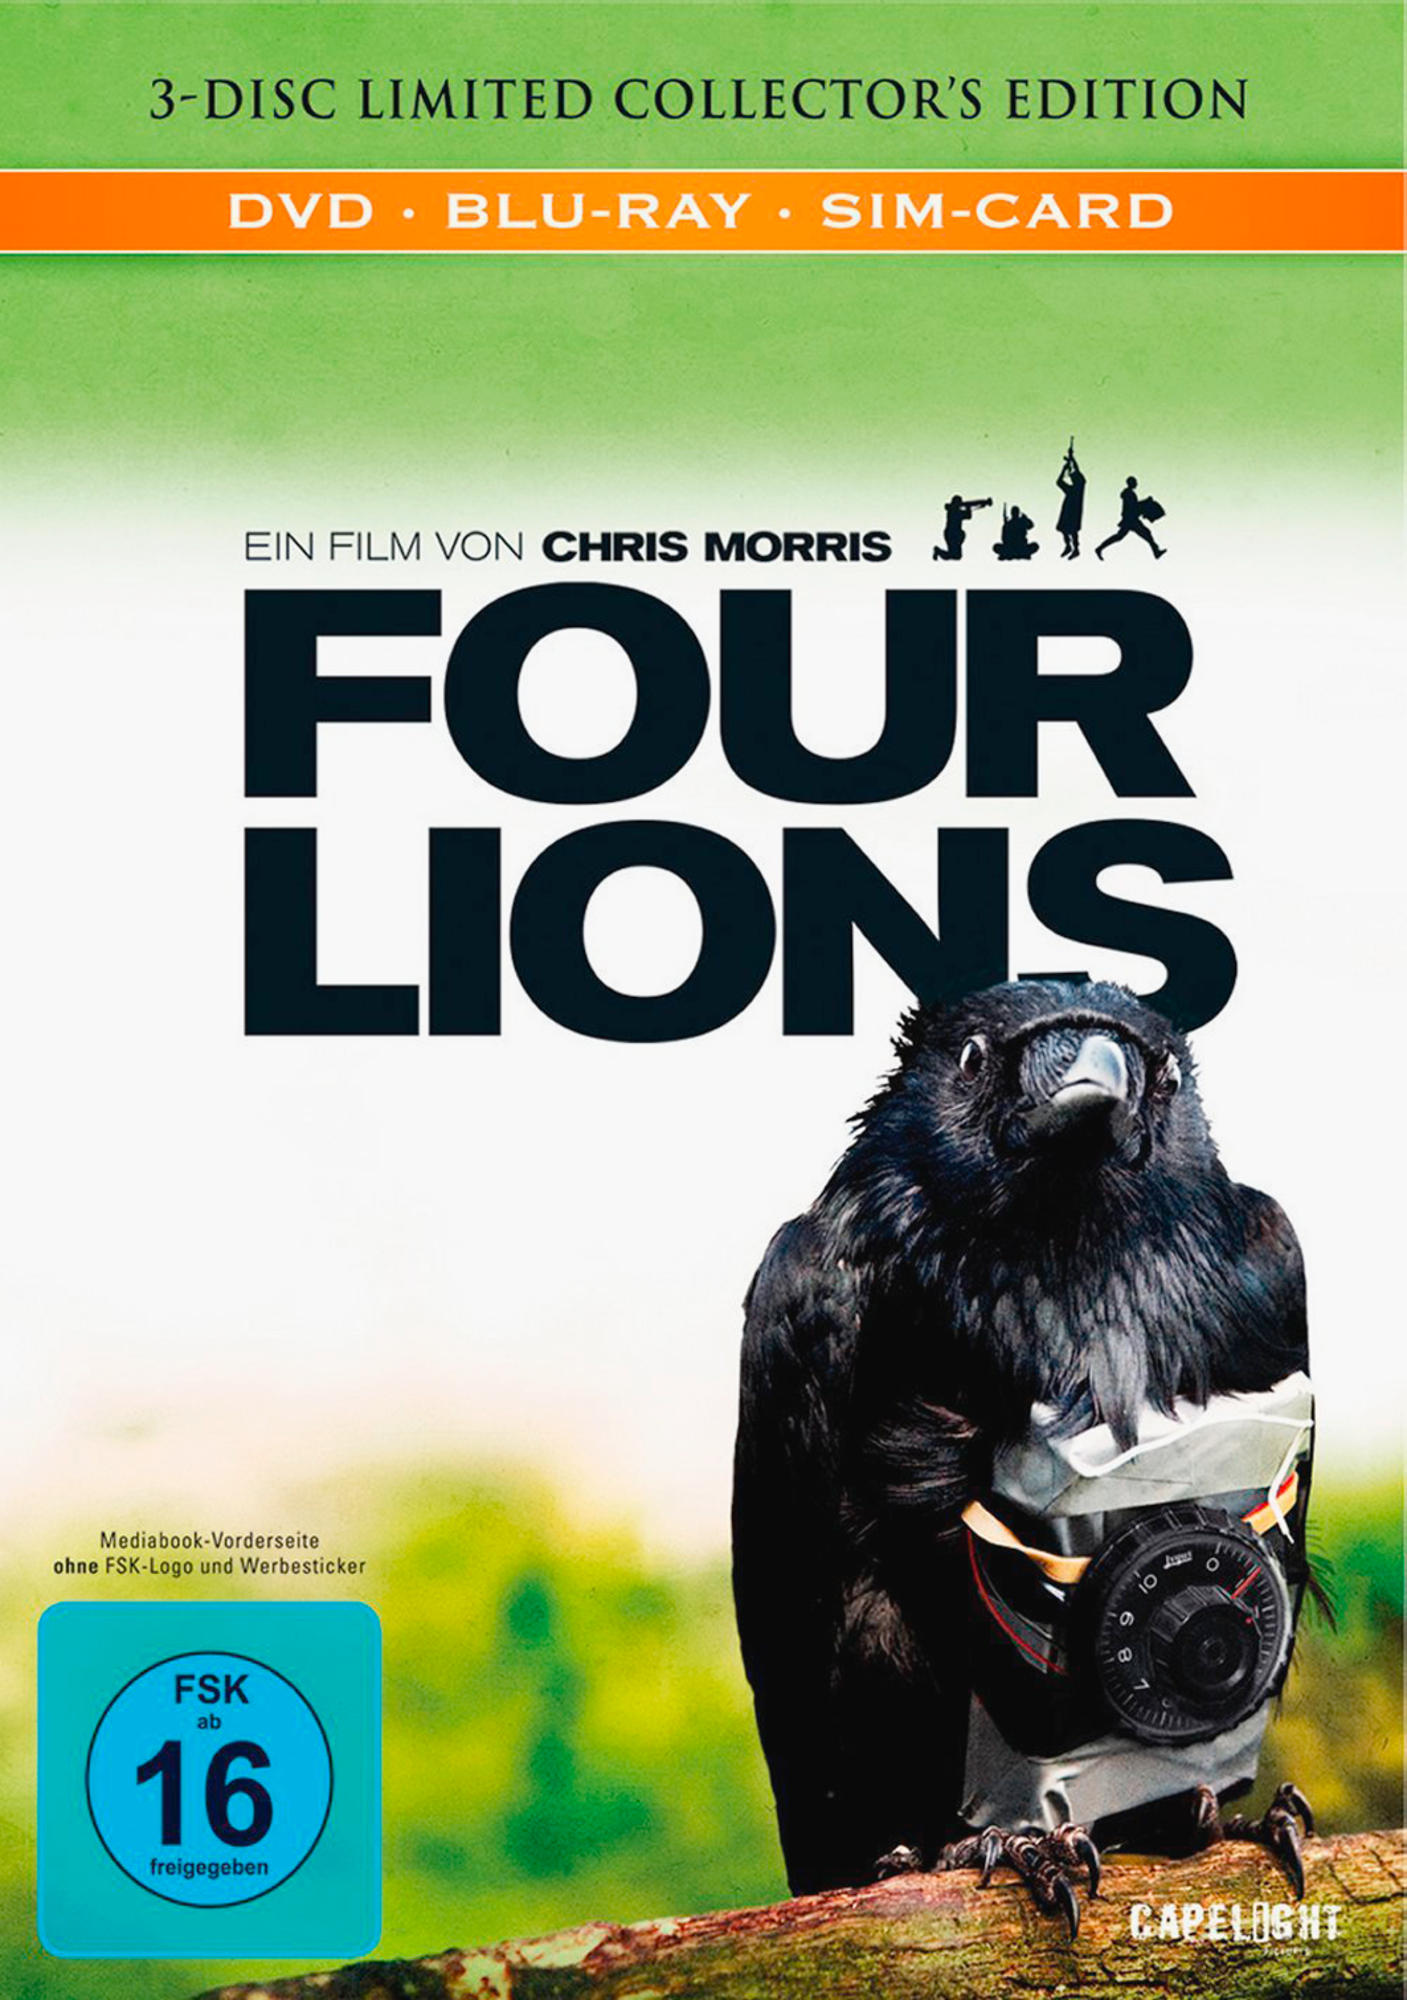 Lions Four Blu-ray + DVD